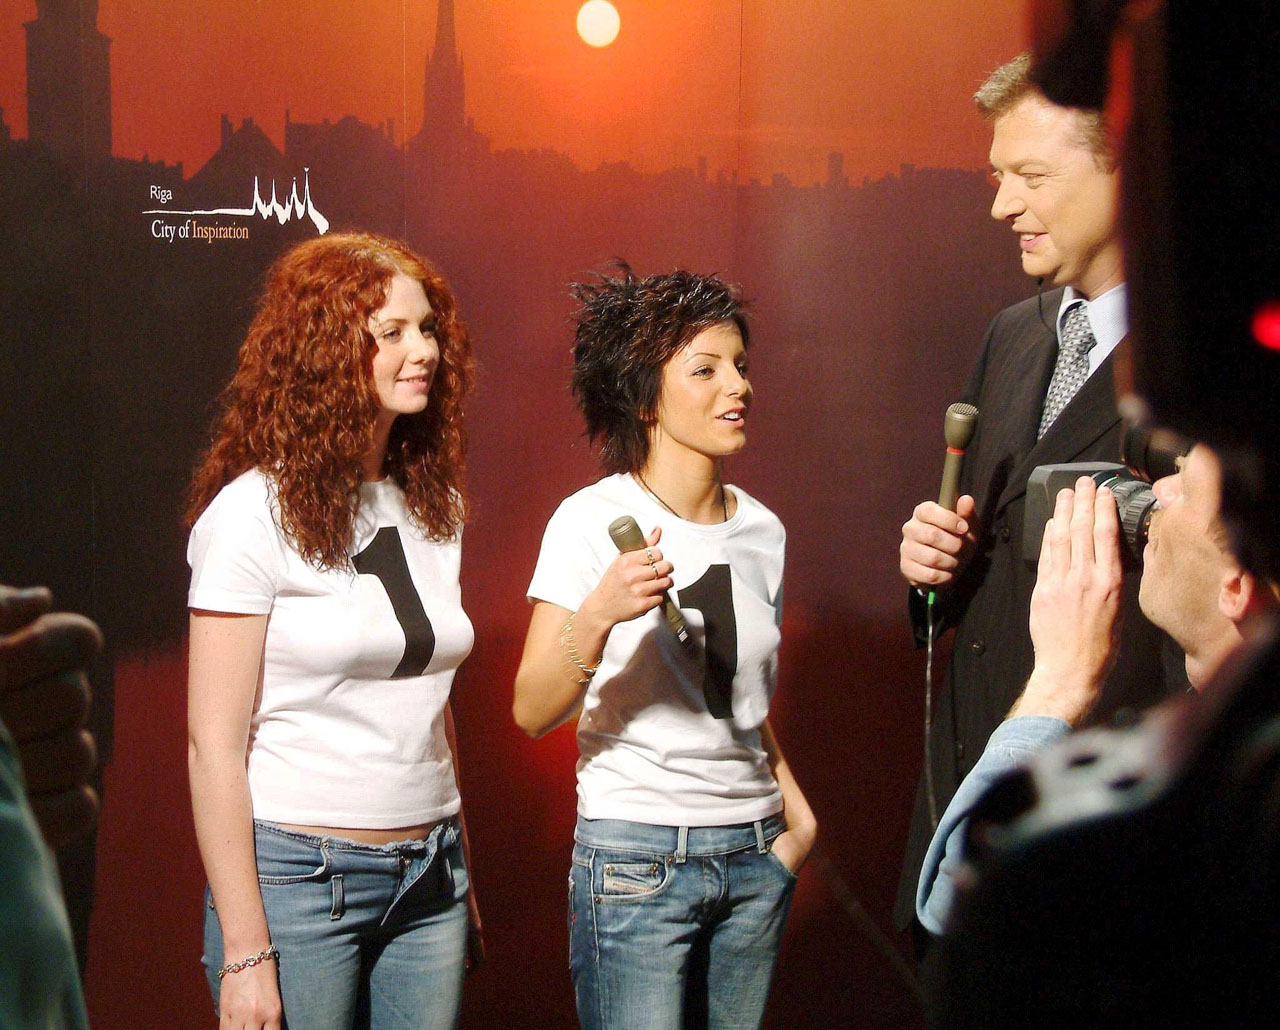 ТАТУ - Eurovision 2003 After Performance